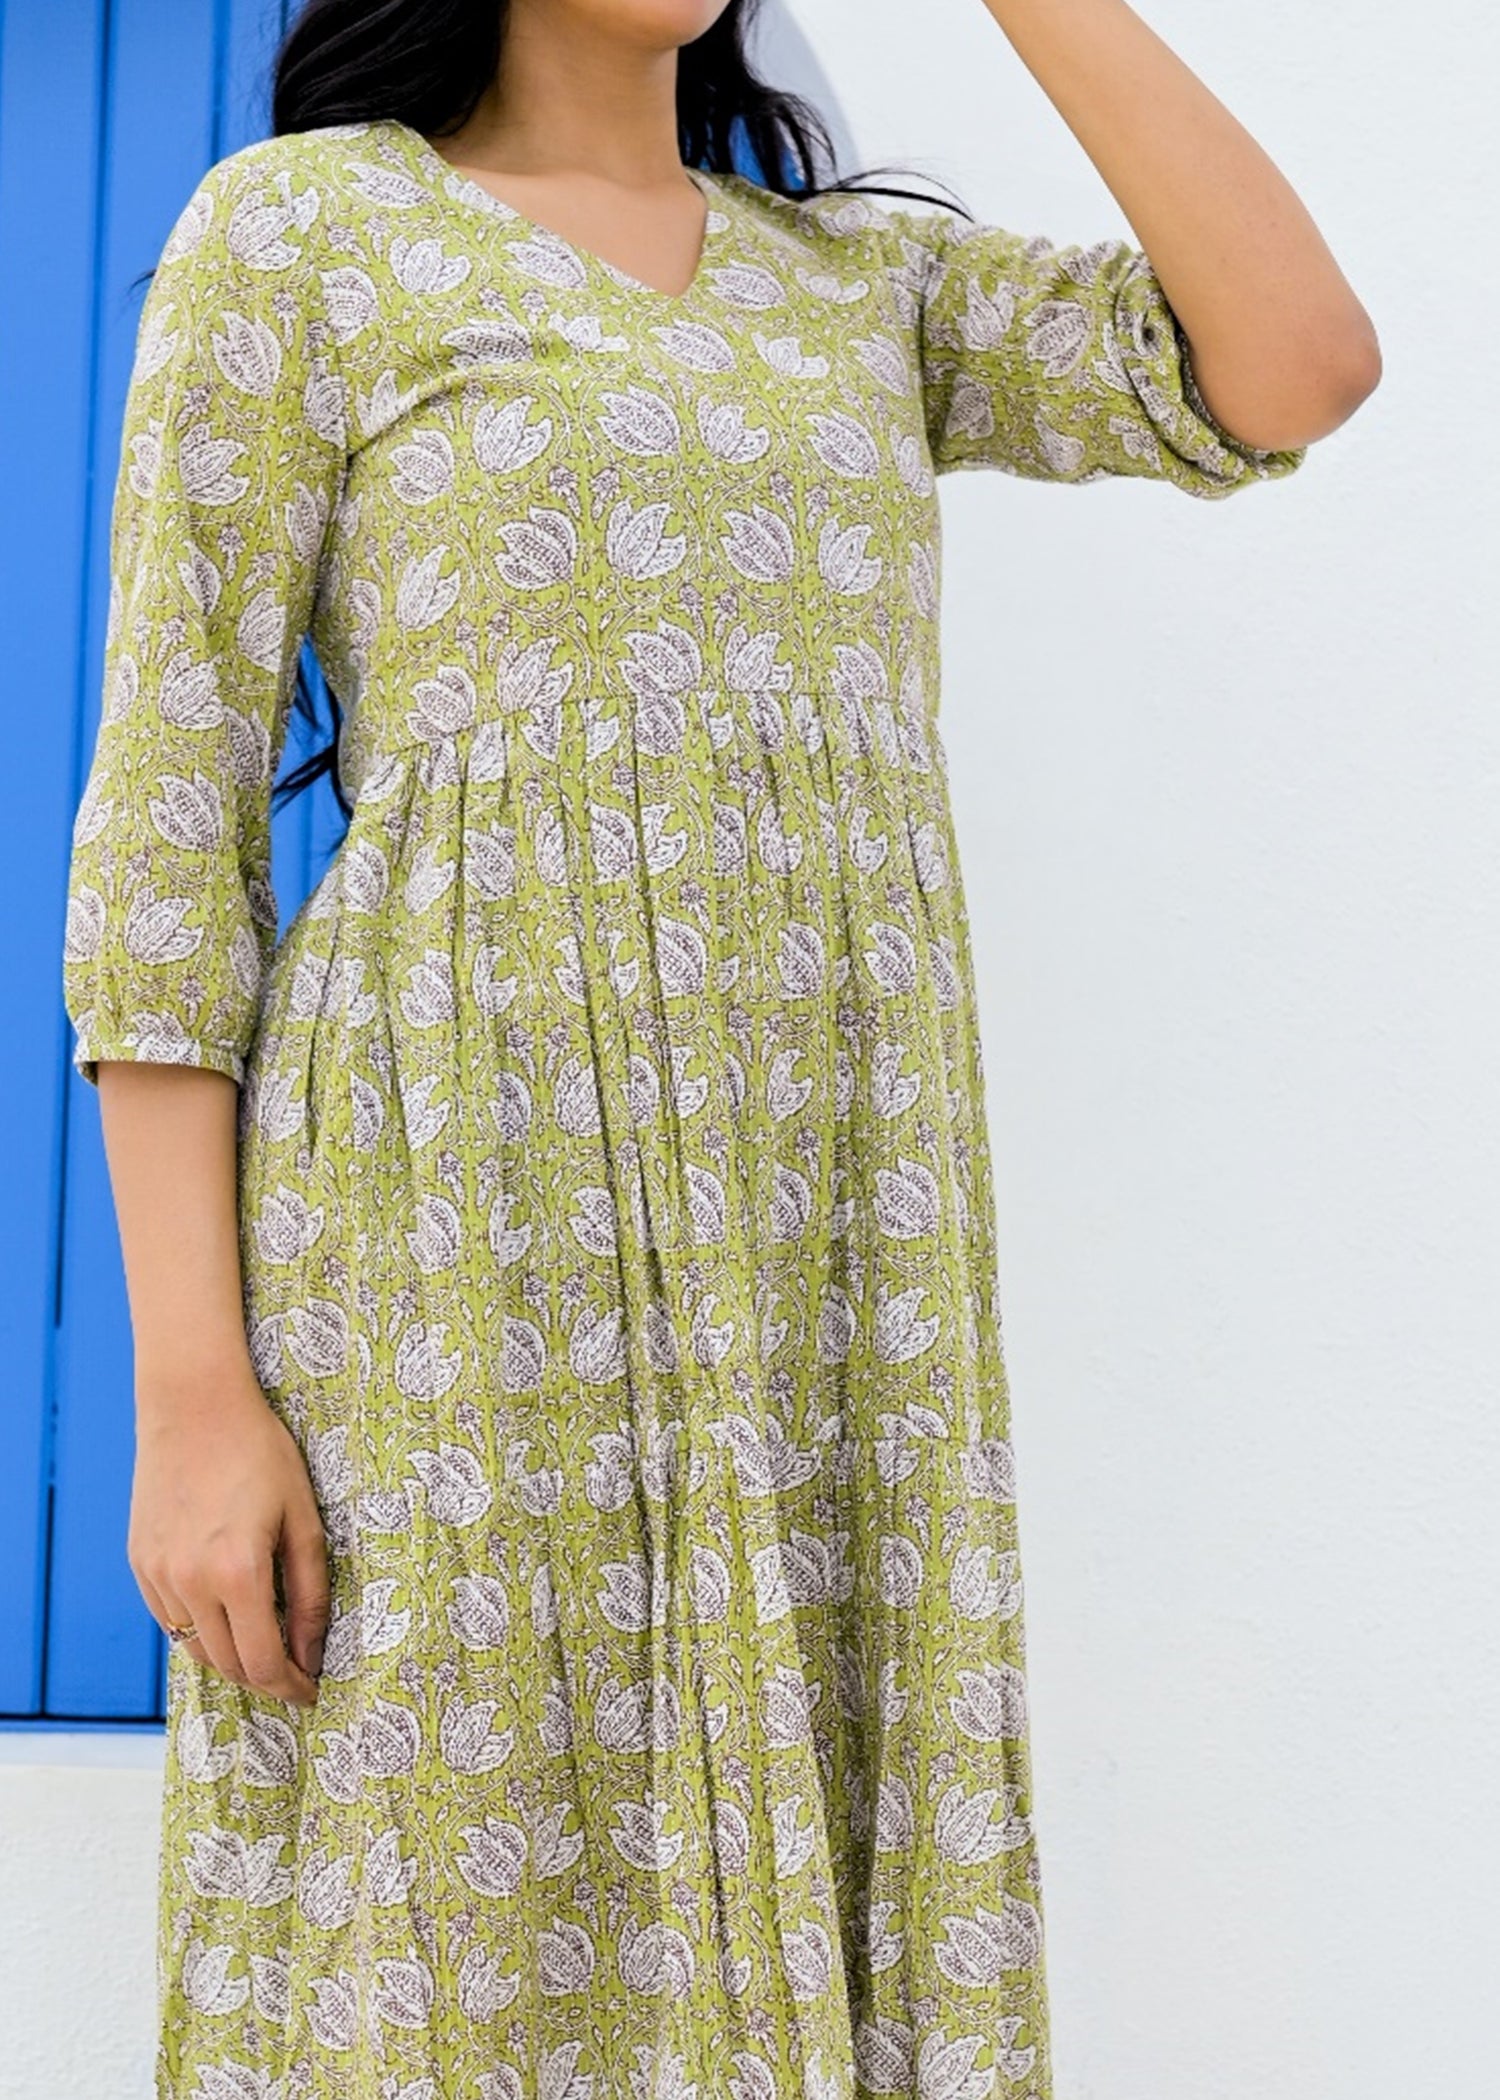 Darpan Katha Couple Matching Shirt and Dress - Tusok